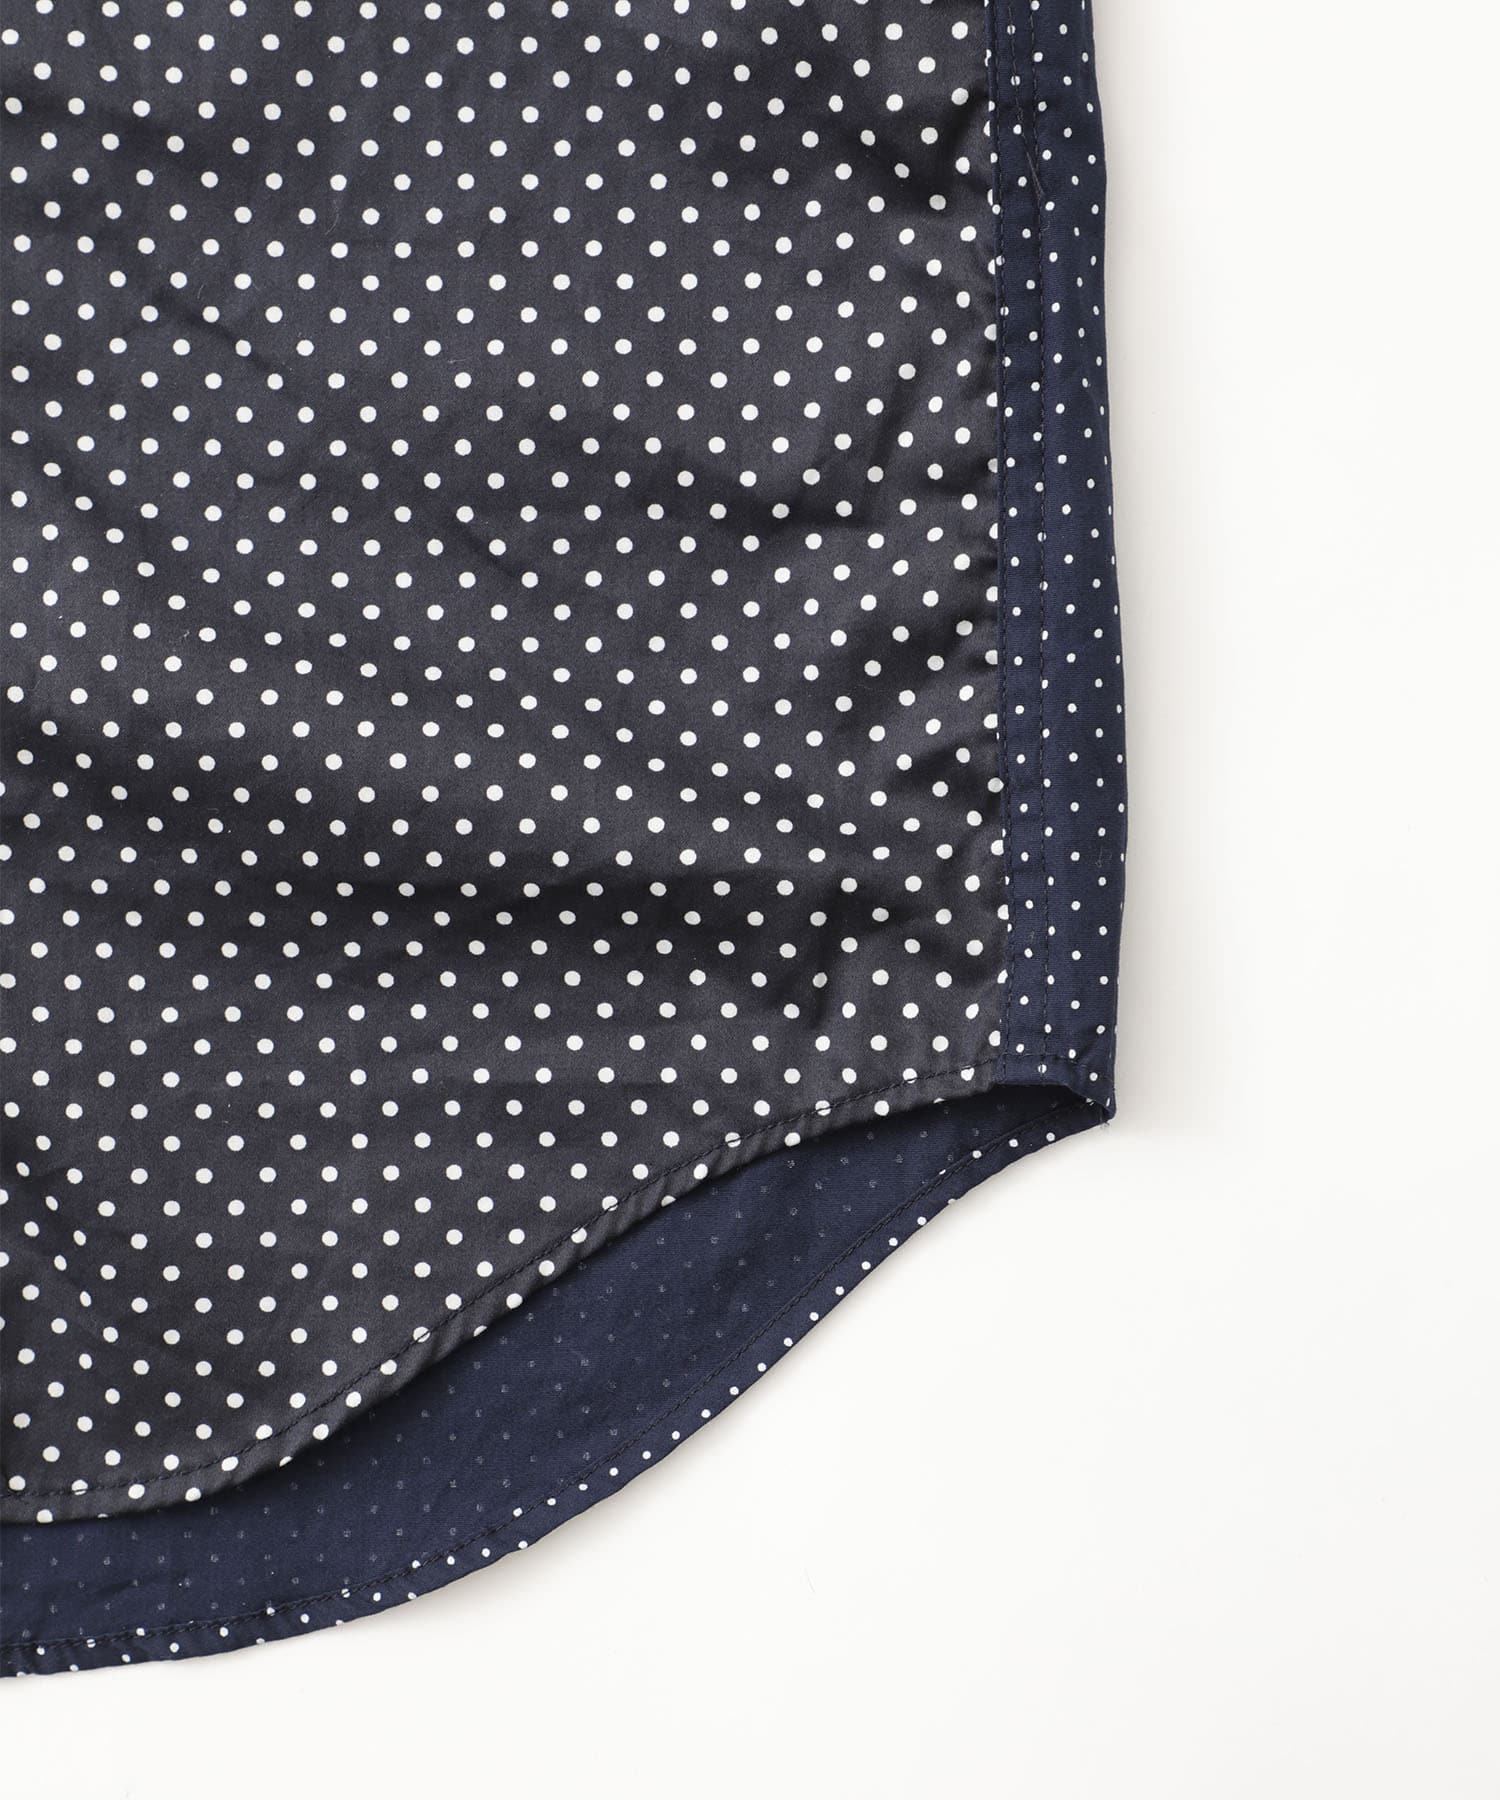 Combo Short Collar Shirt Polka Dot Engineered Garments